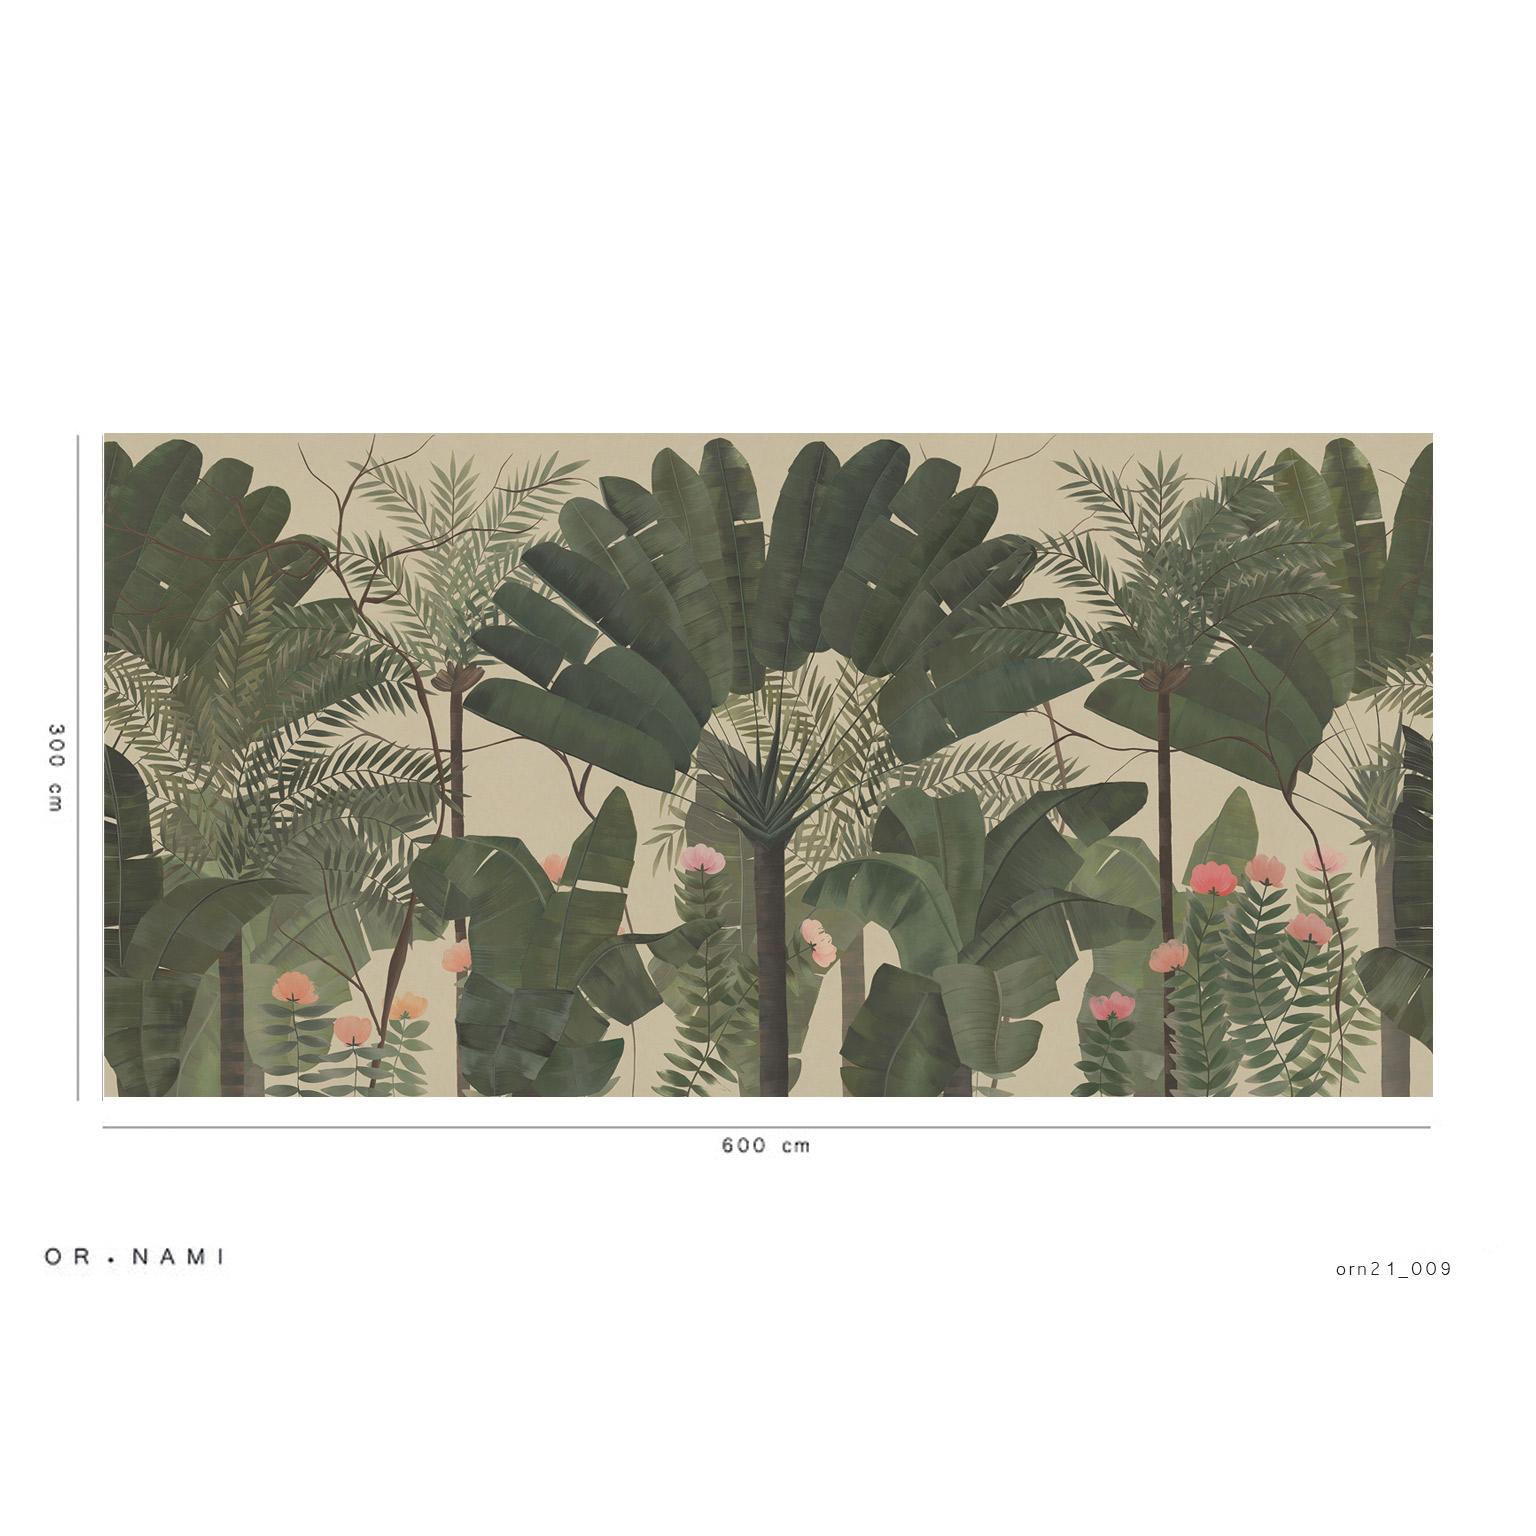 Italian Ornami Nature Oriental Jungle Vinyl Wallpaper Made in Italy Digital Printing For Sale